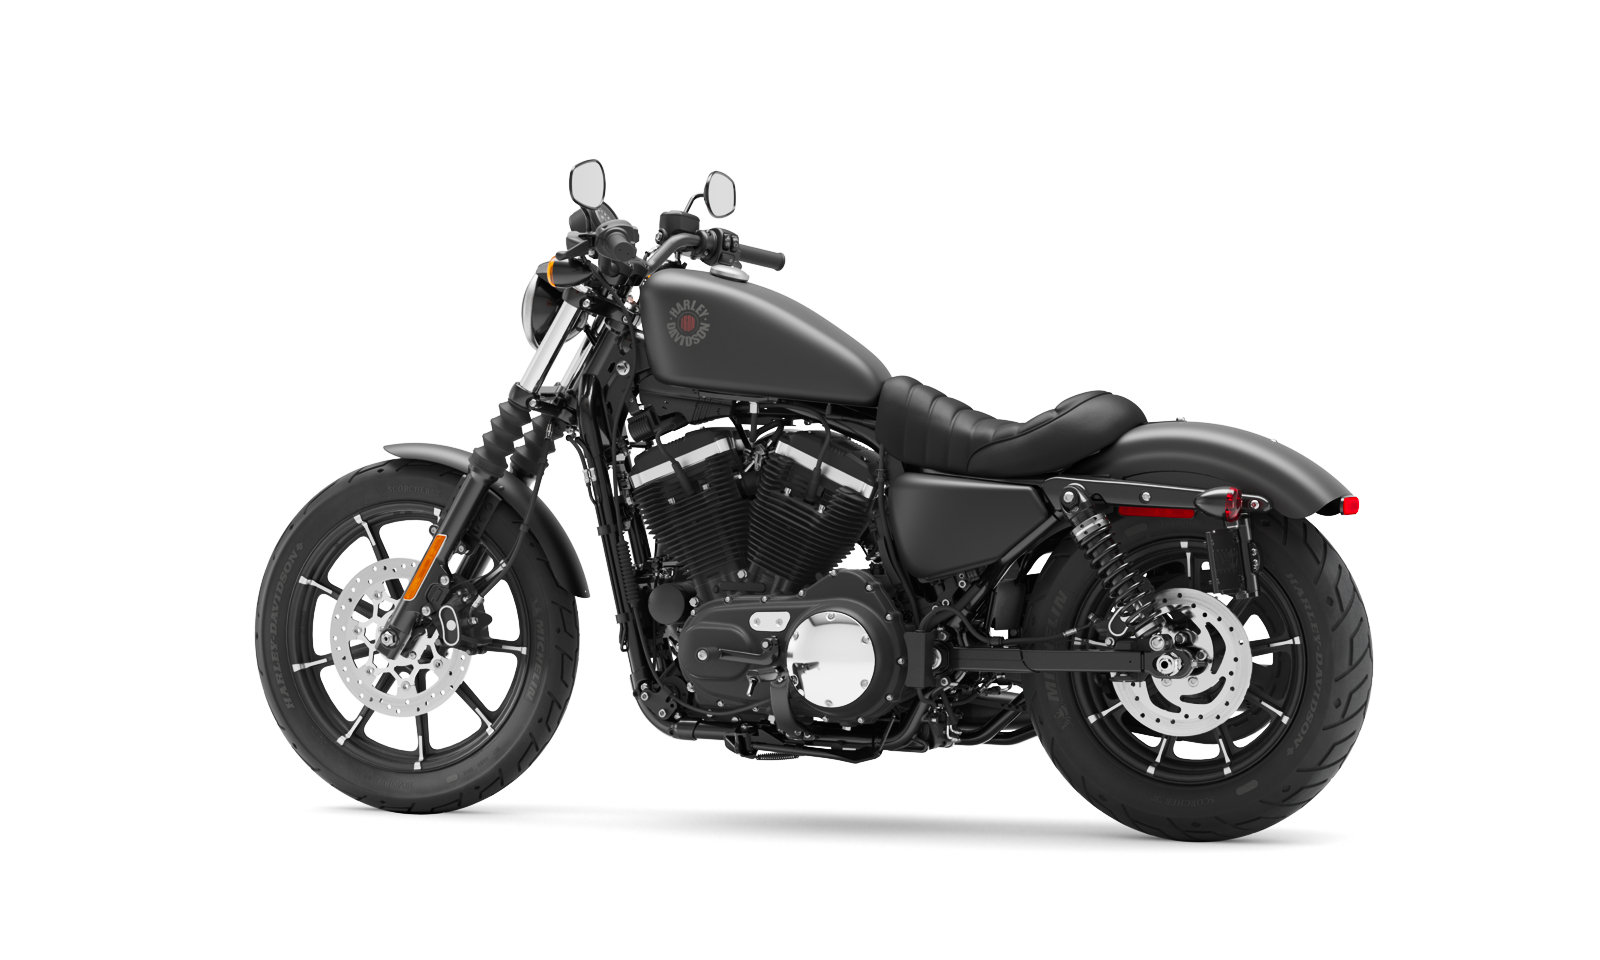 Harley Davidson Sportster Price In India Promotion Off60